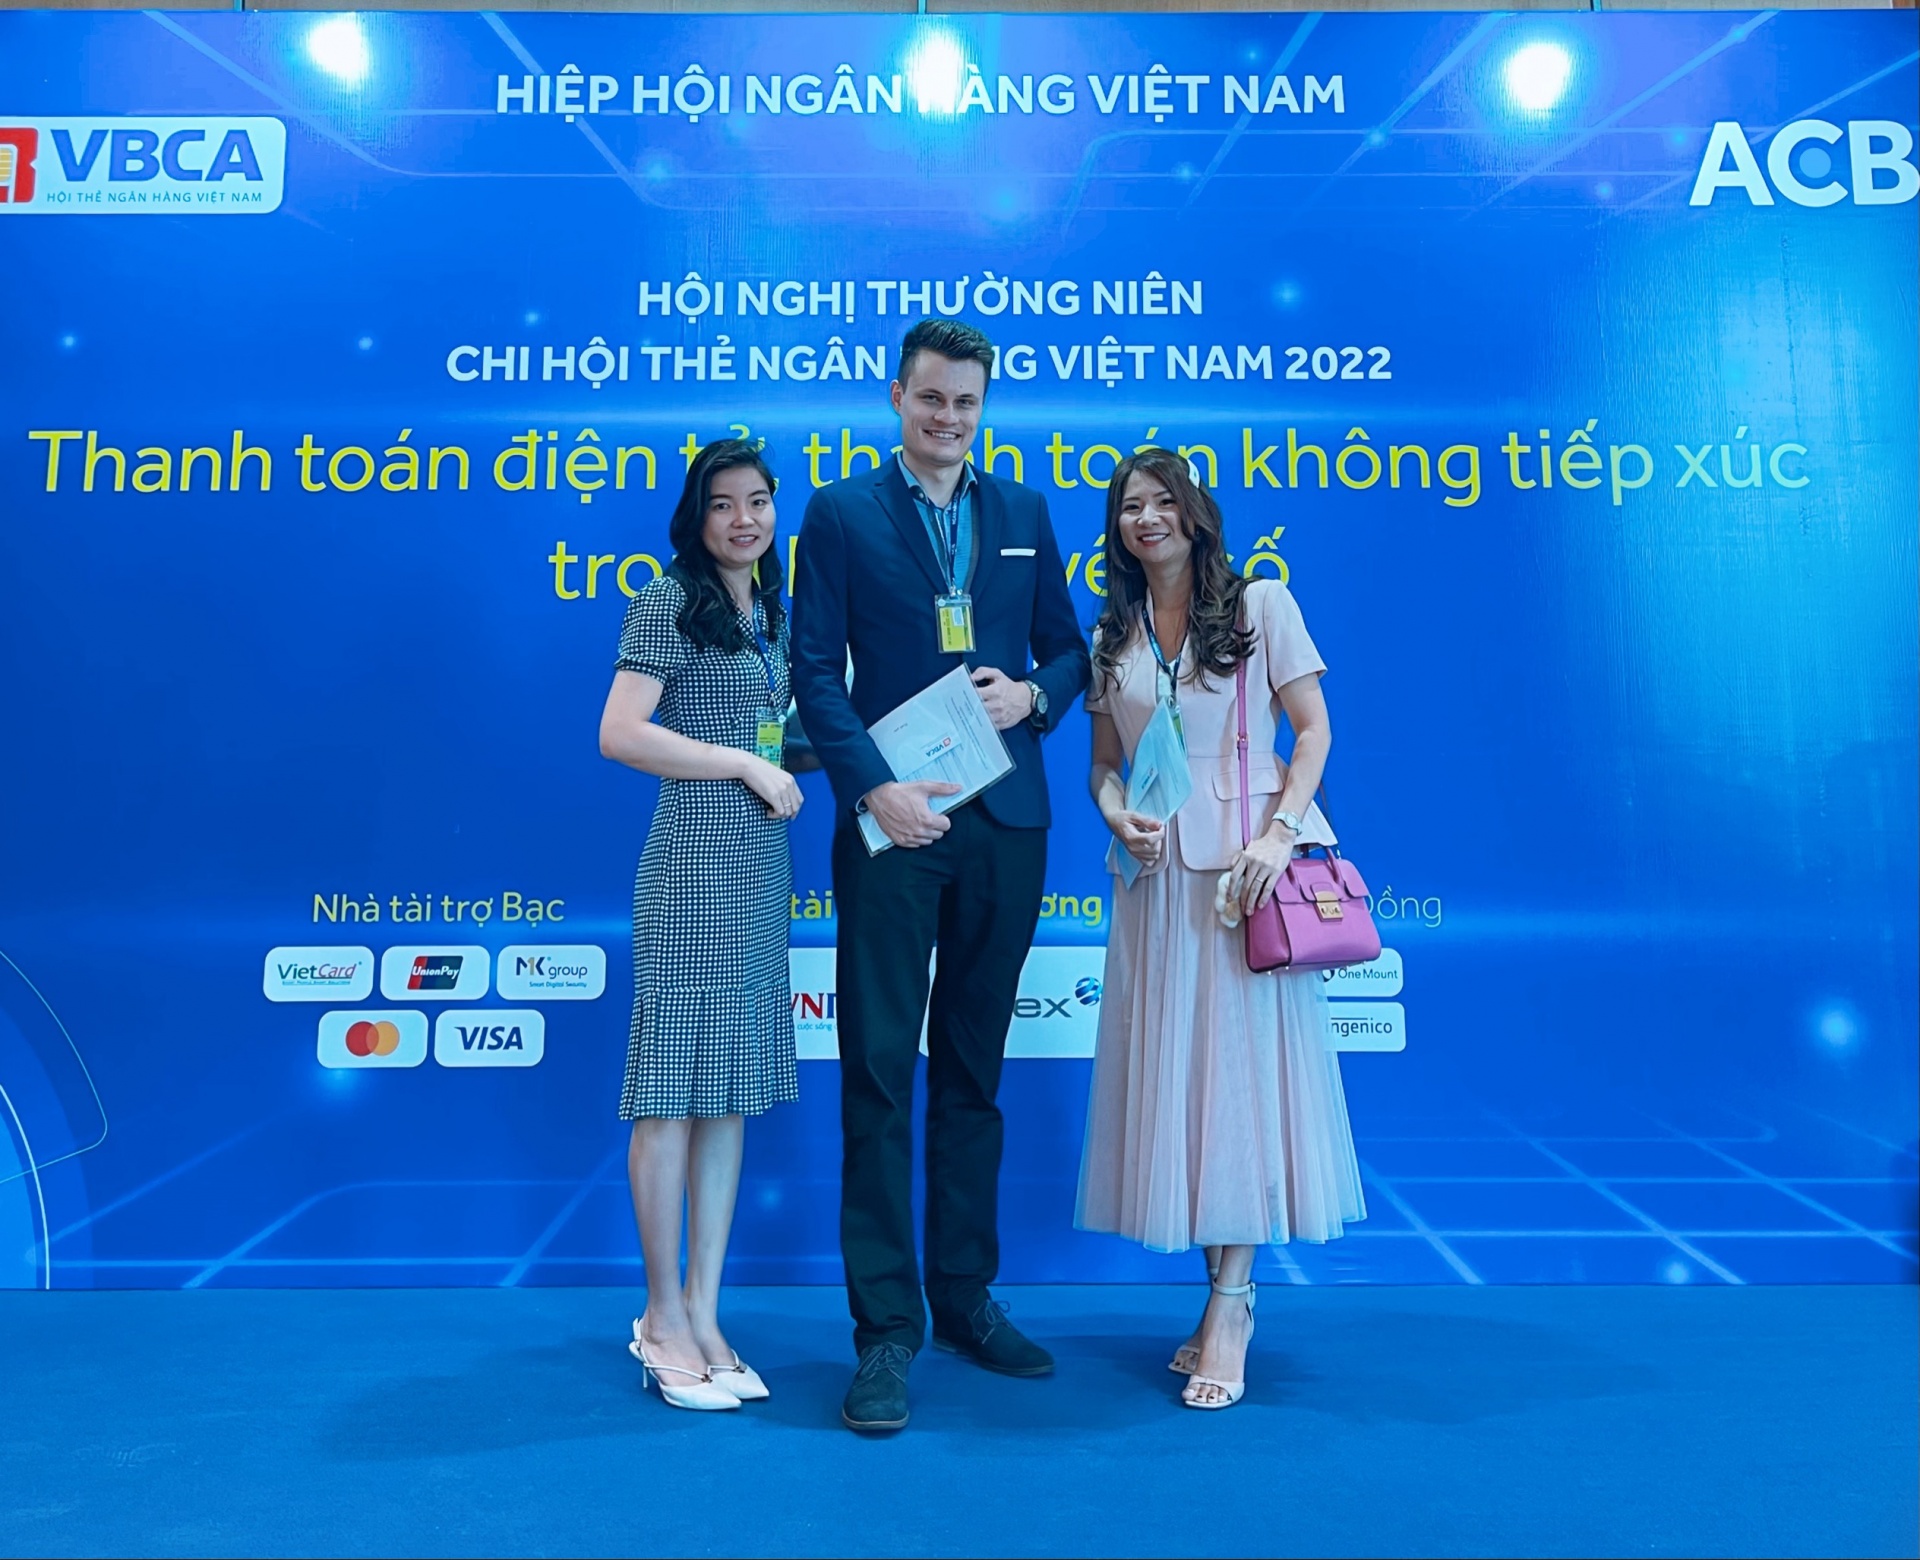 Home Credit becomes member of Vietnam Bank Card Association